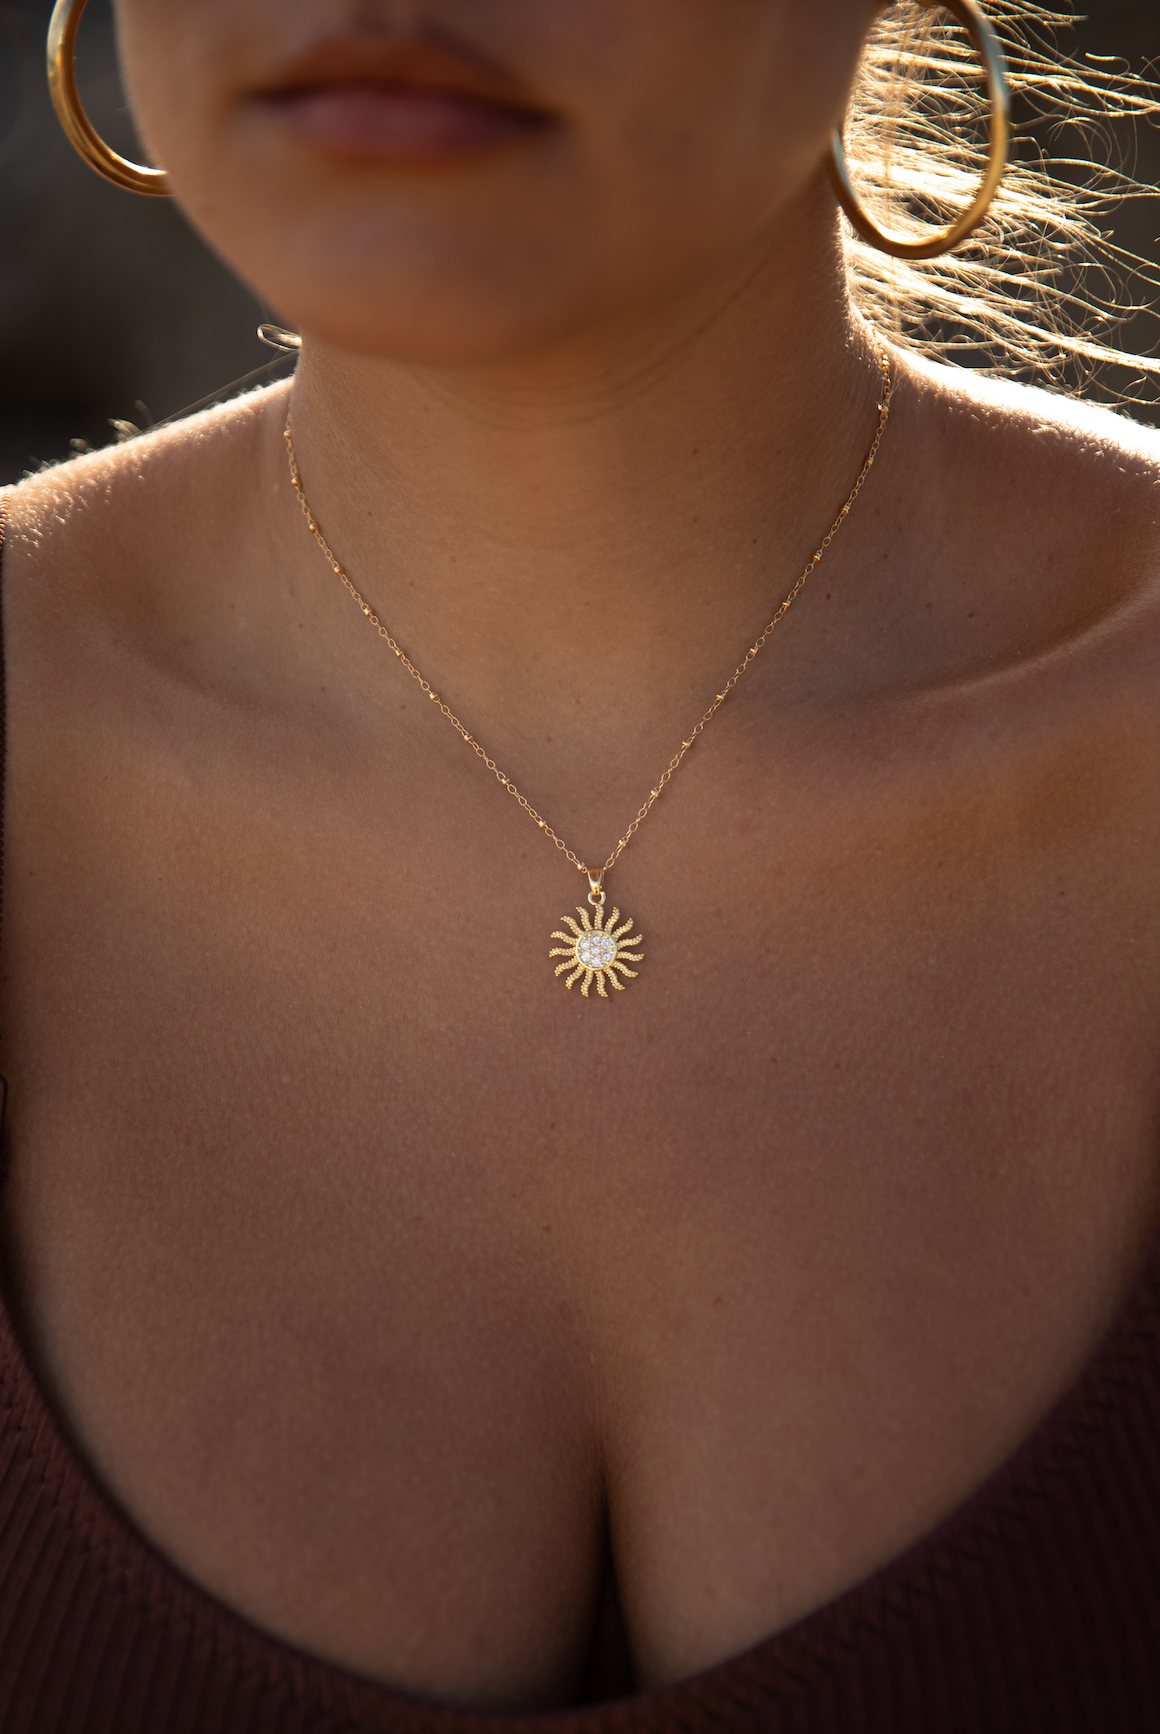 The CZ Sun Necklace